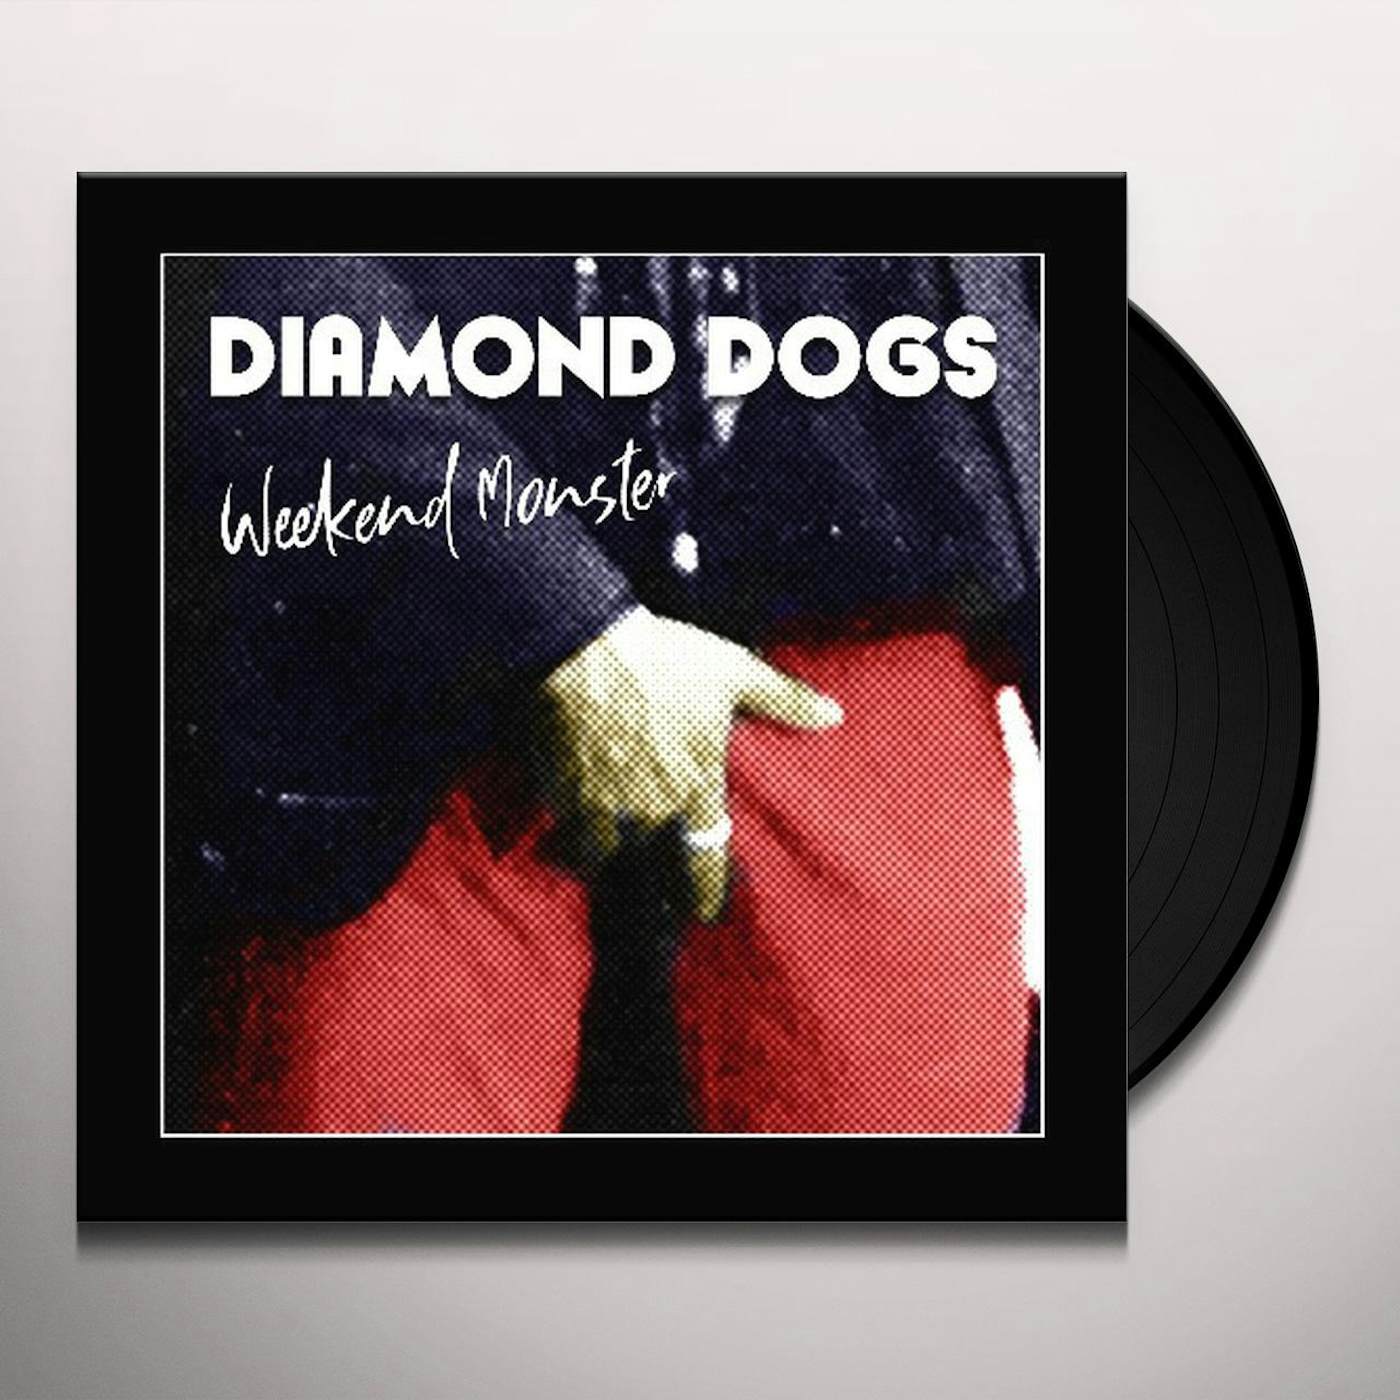 Diamond Dogs Weekend Monster Vinyl Record